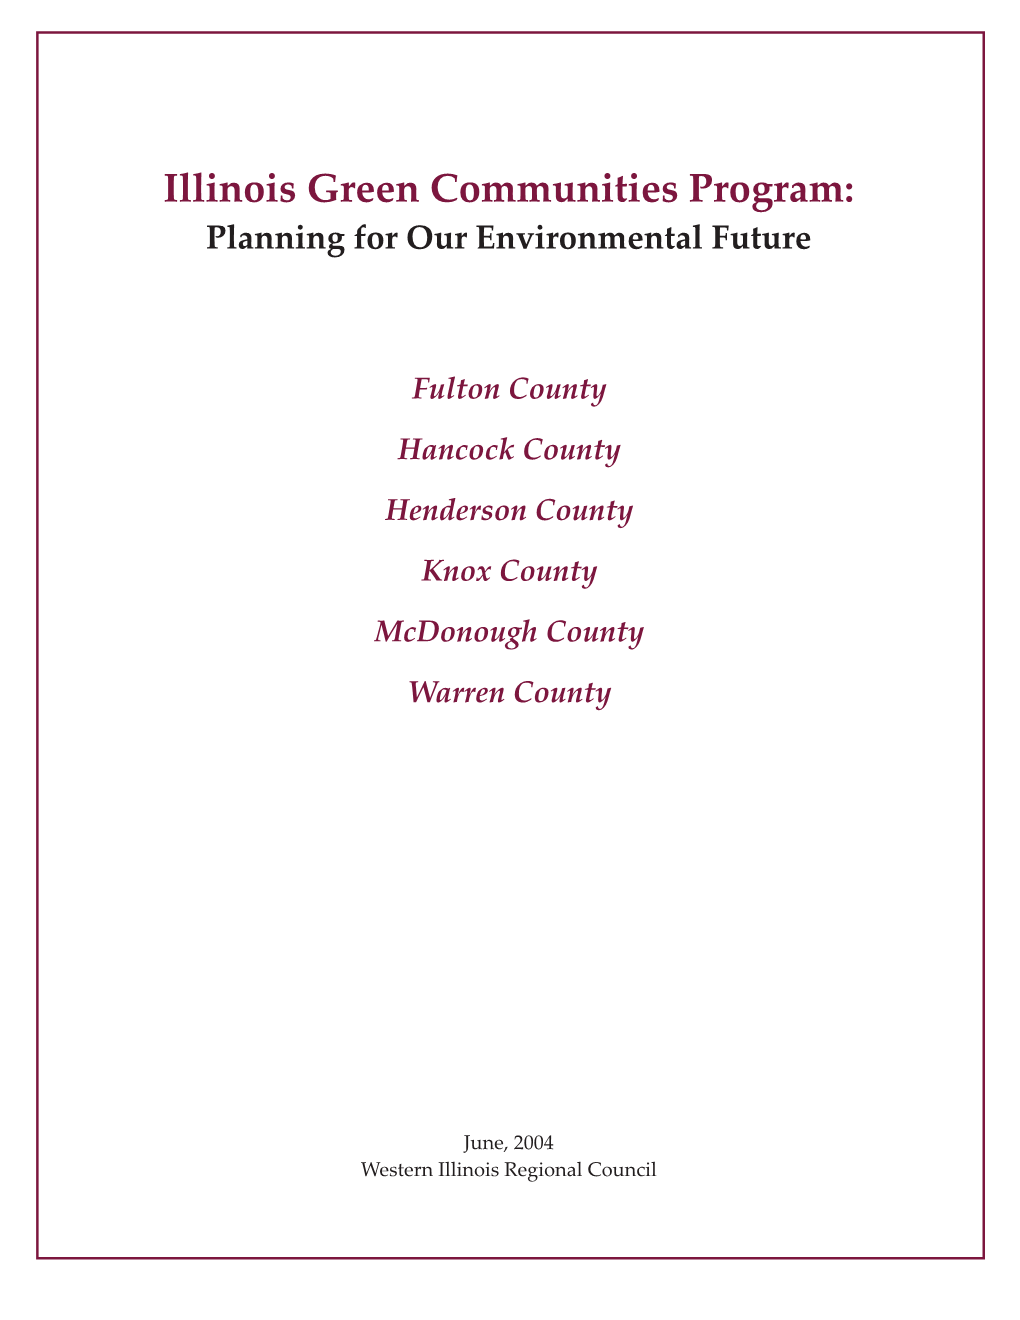 Illinois Green Document Web.Cdr